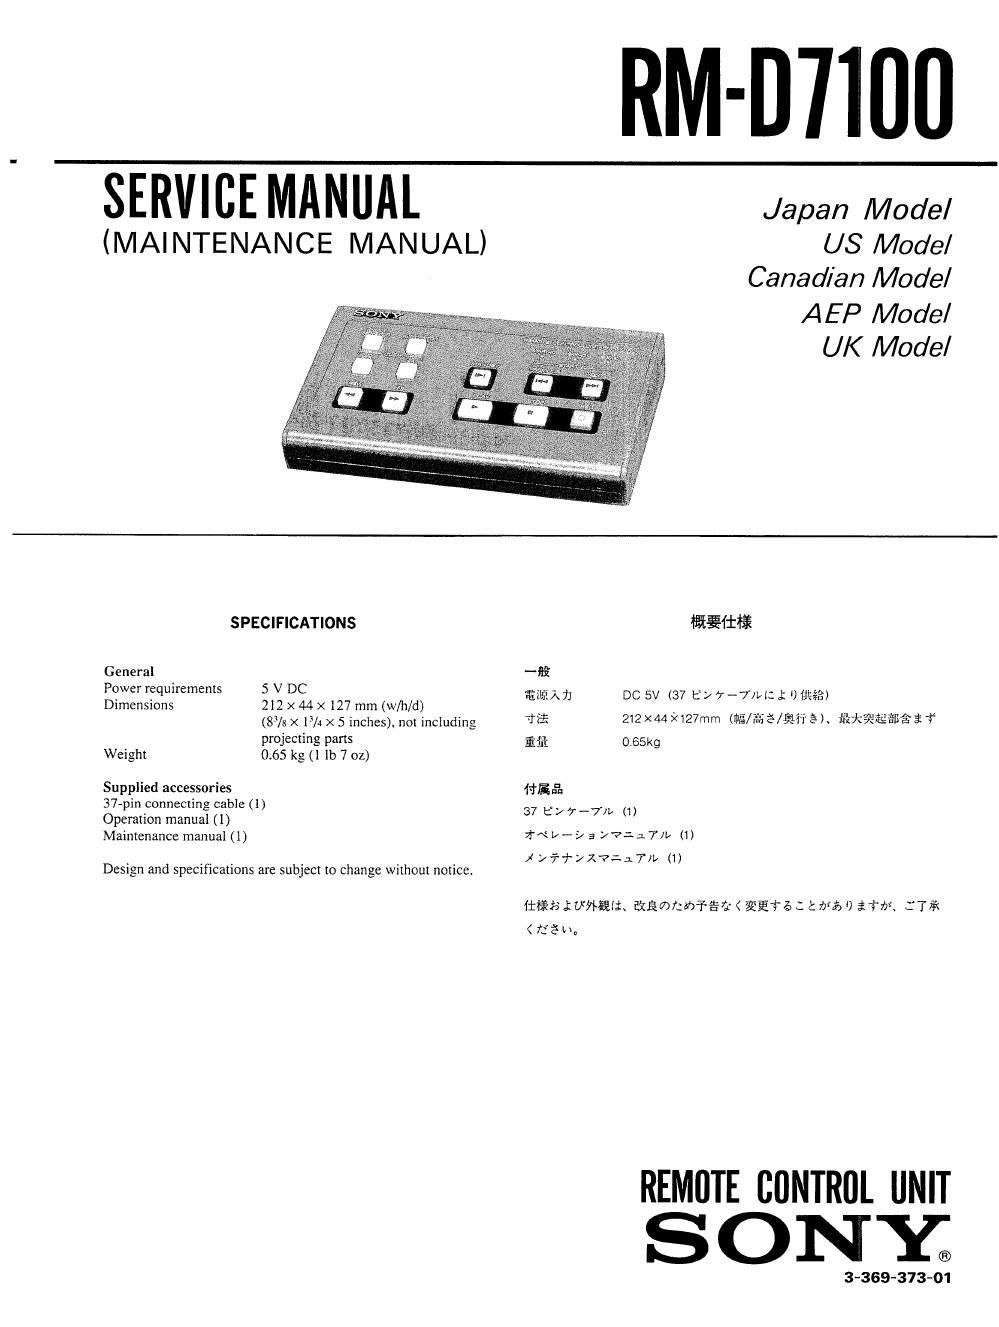 sony rm d 7100 service manual